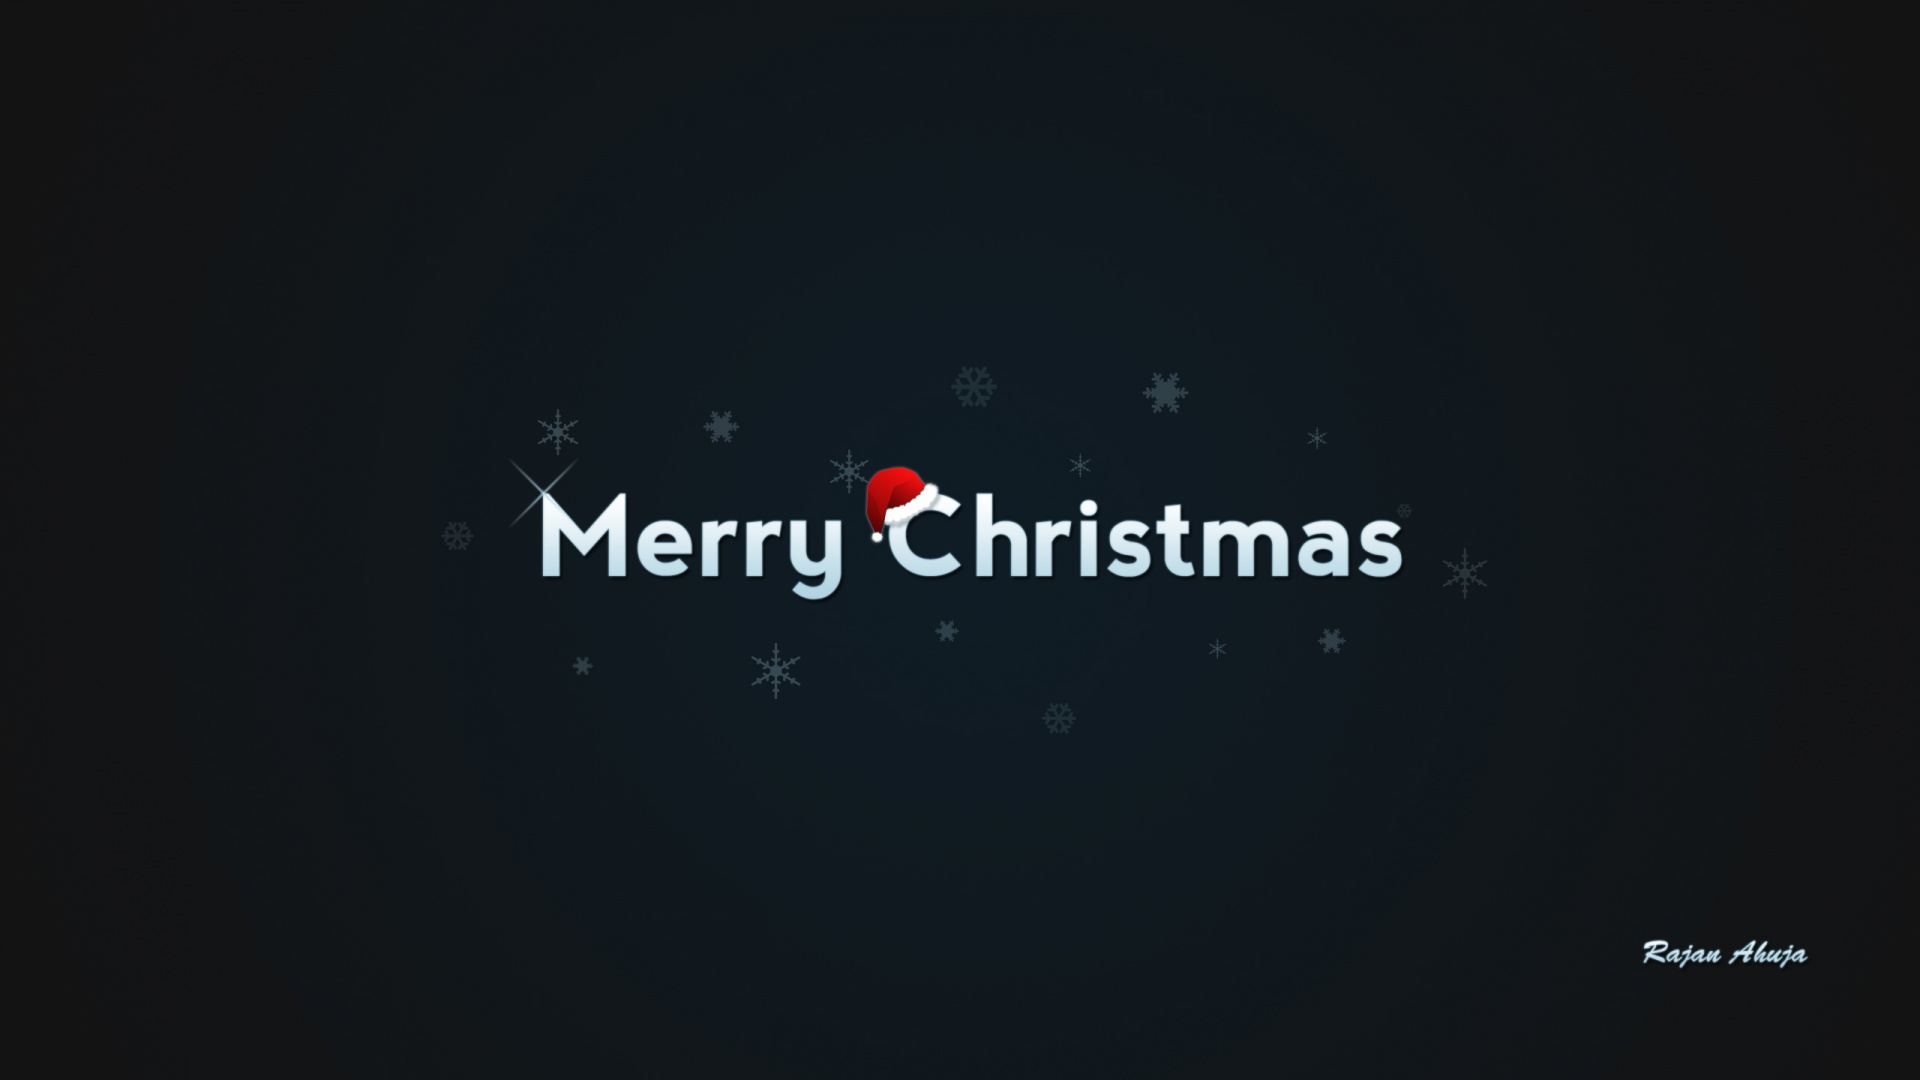 Christian Desktop Wallpaper Background Merry Christmas Car